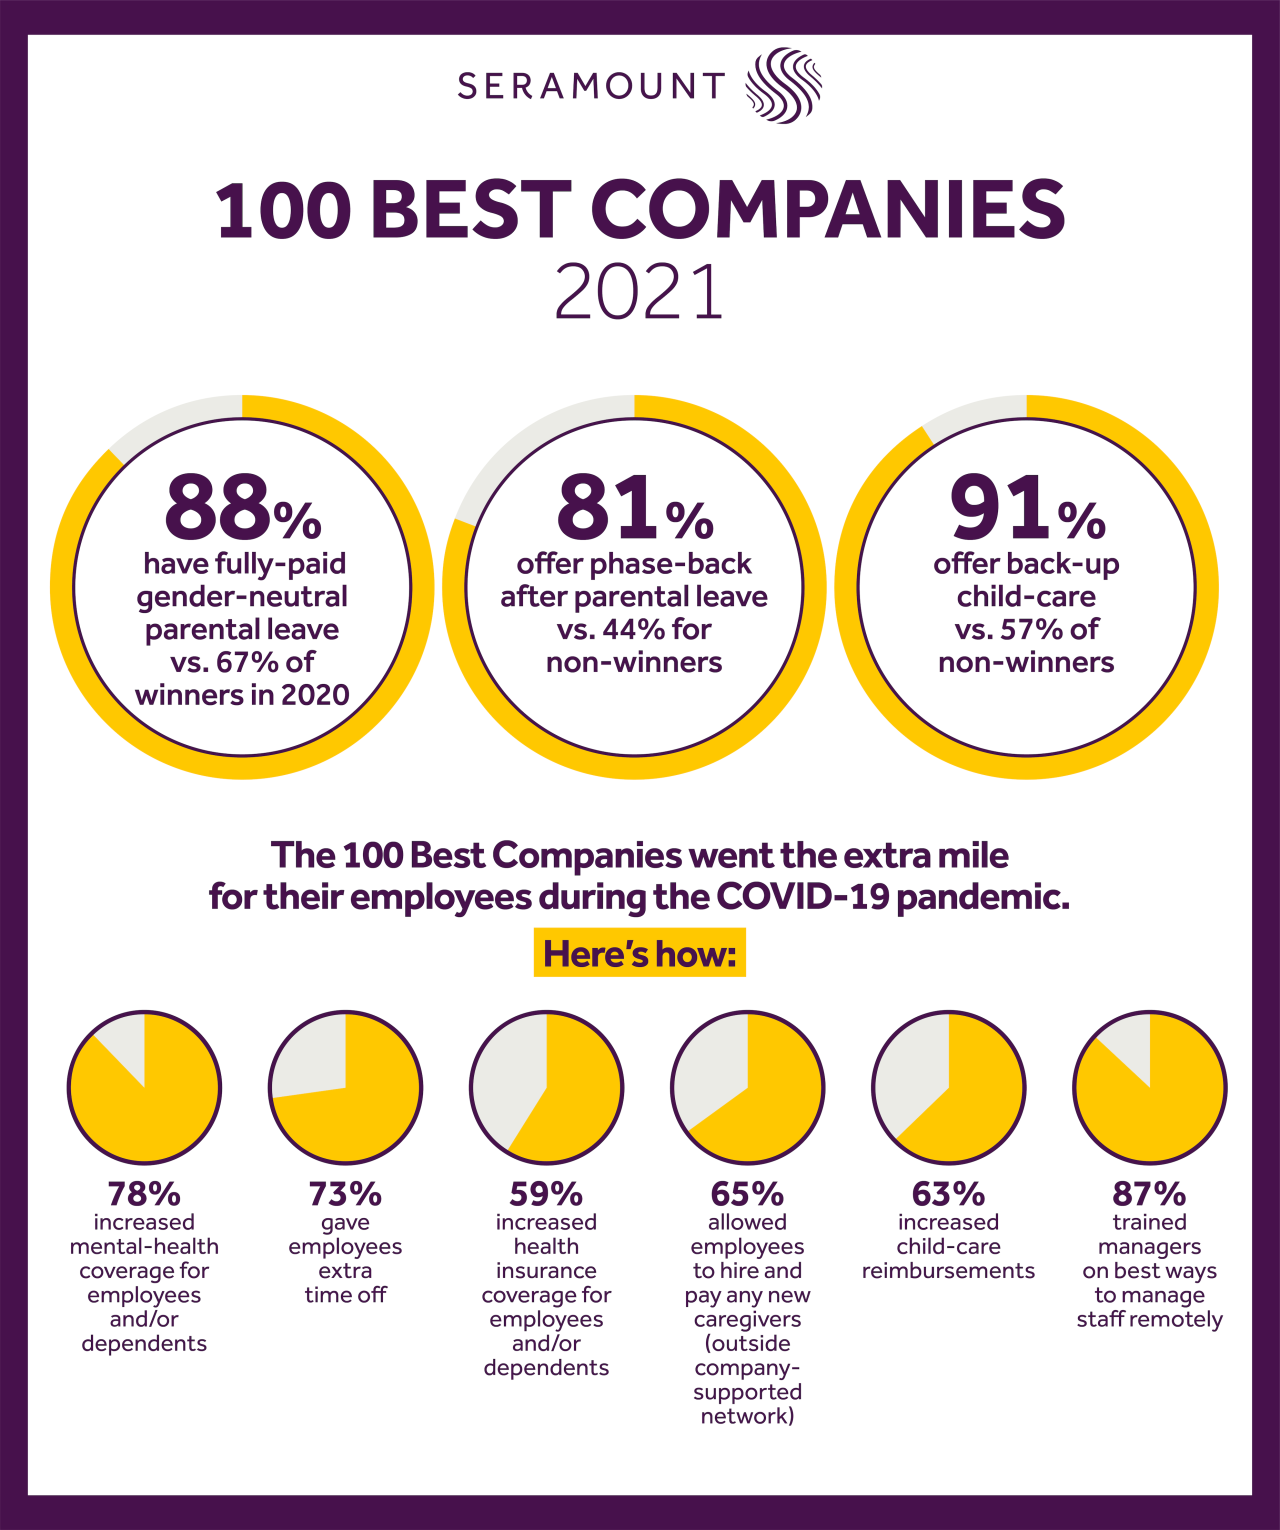 Best companies 2021 infographic